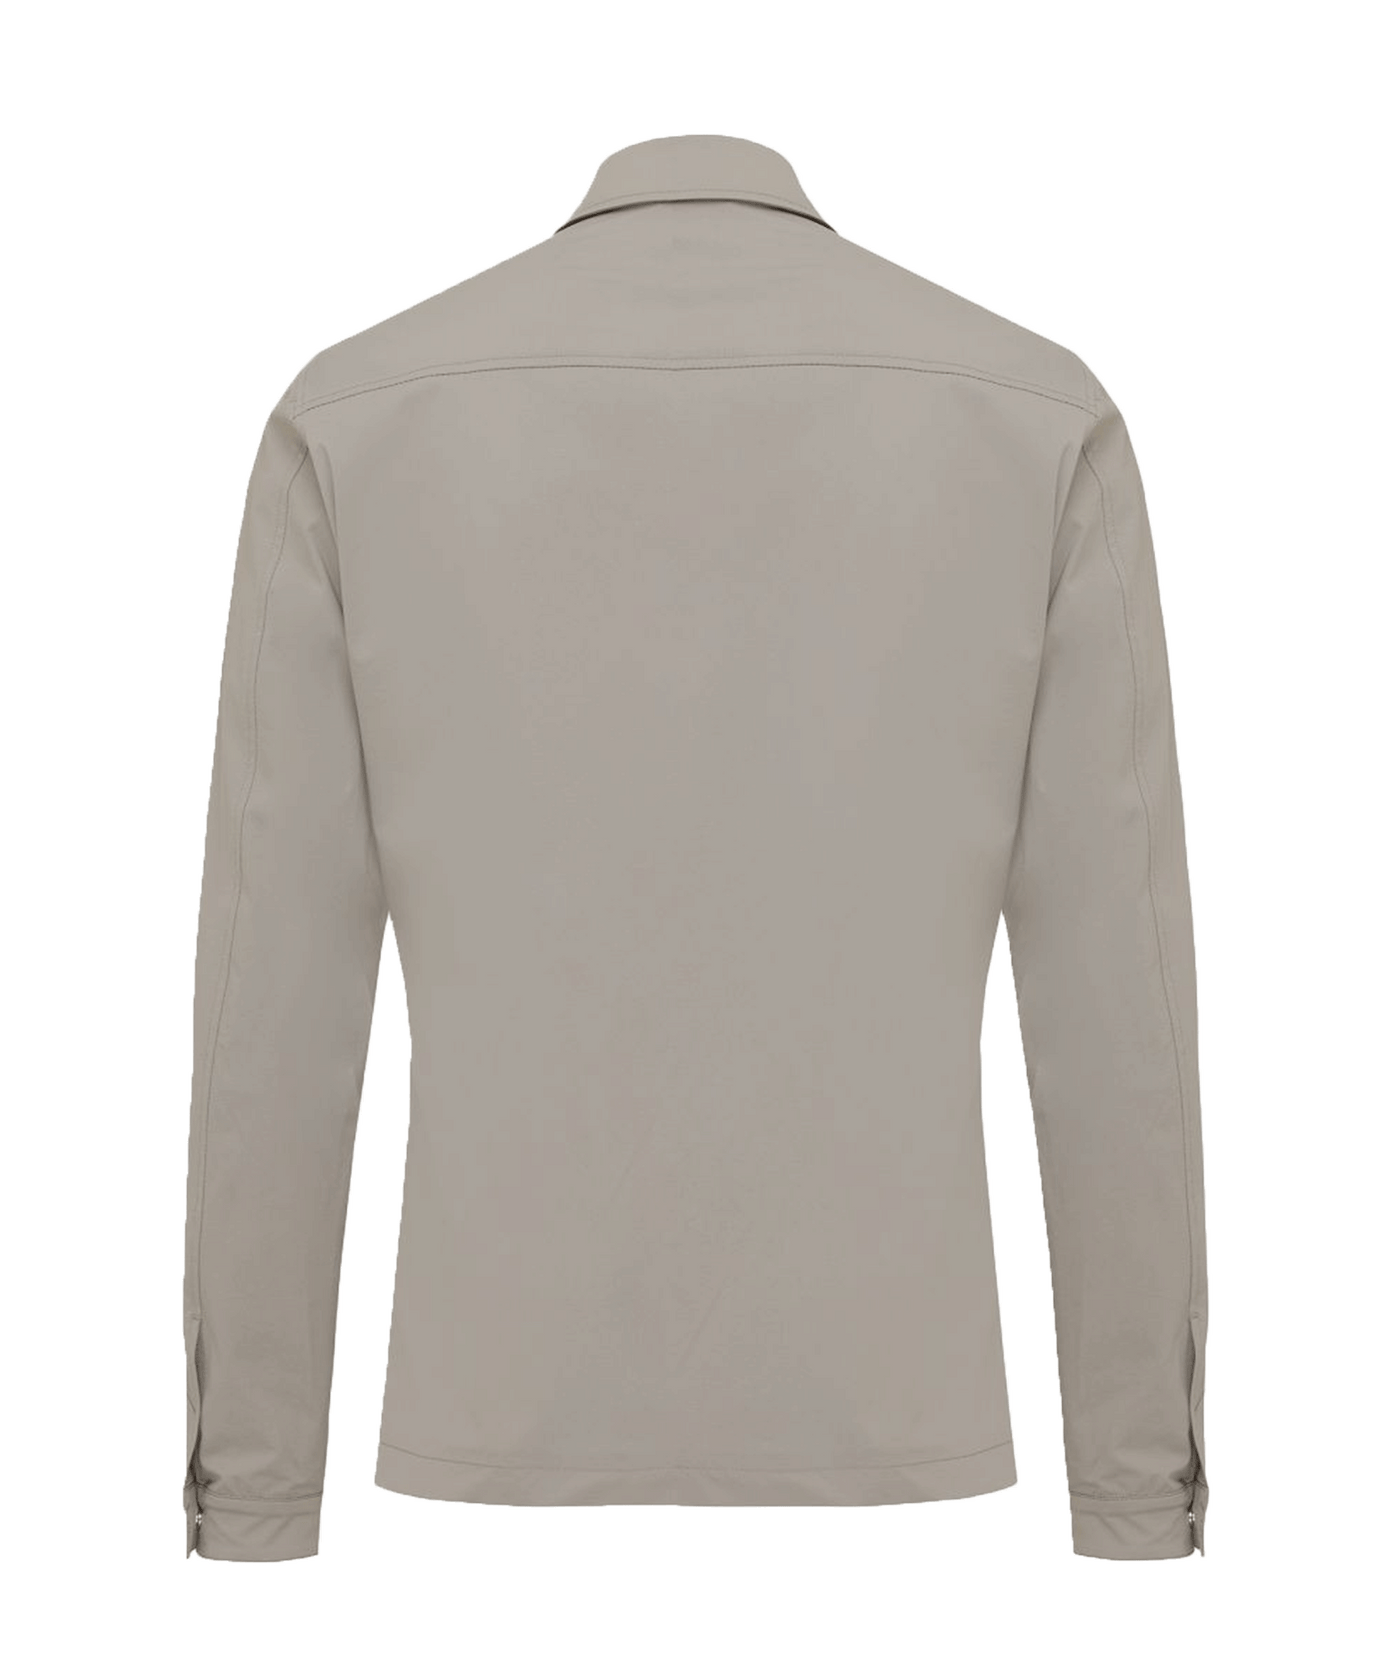 Genti - S9277-1738 - Prince Shirt - 026 Grey